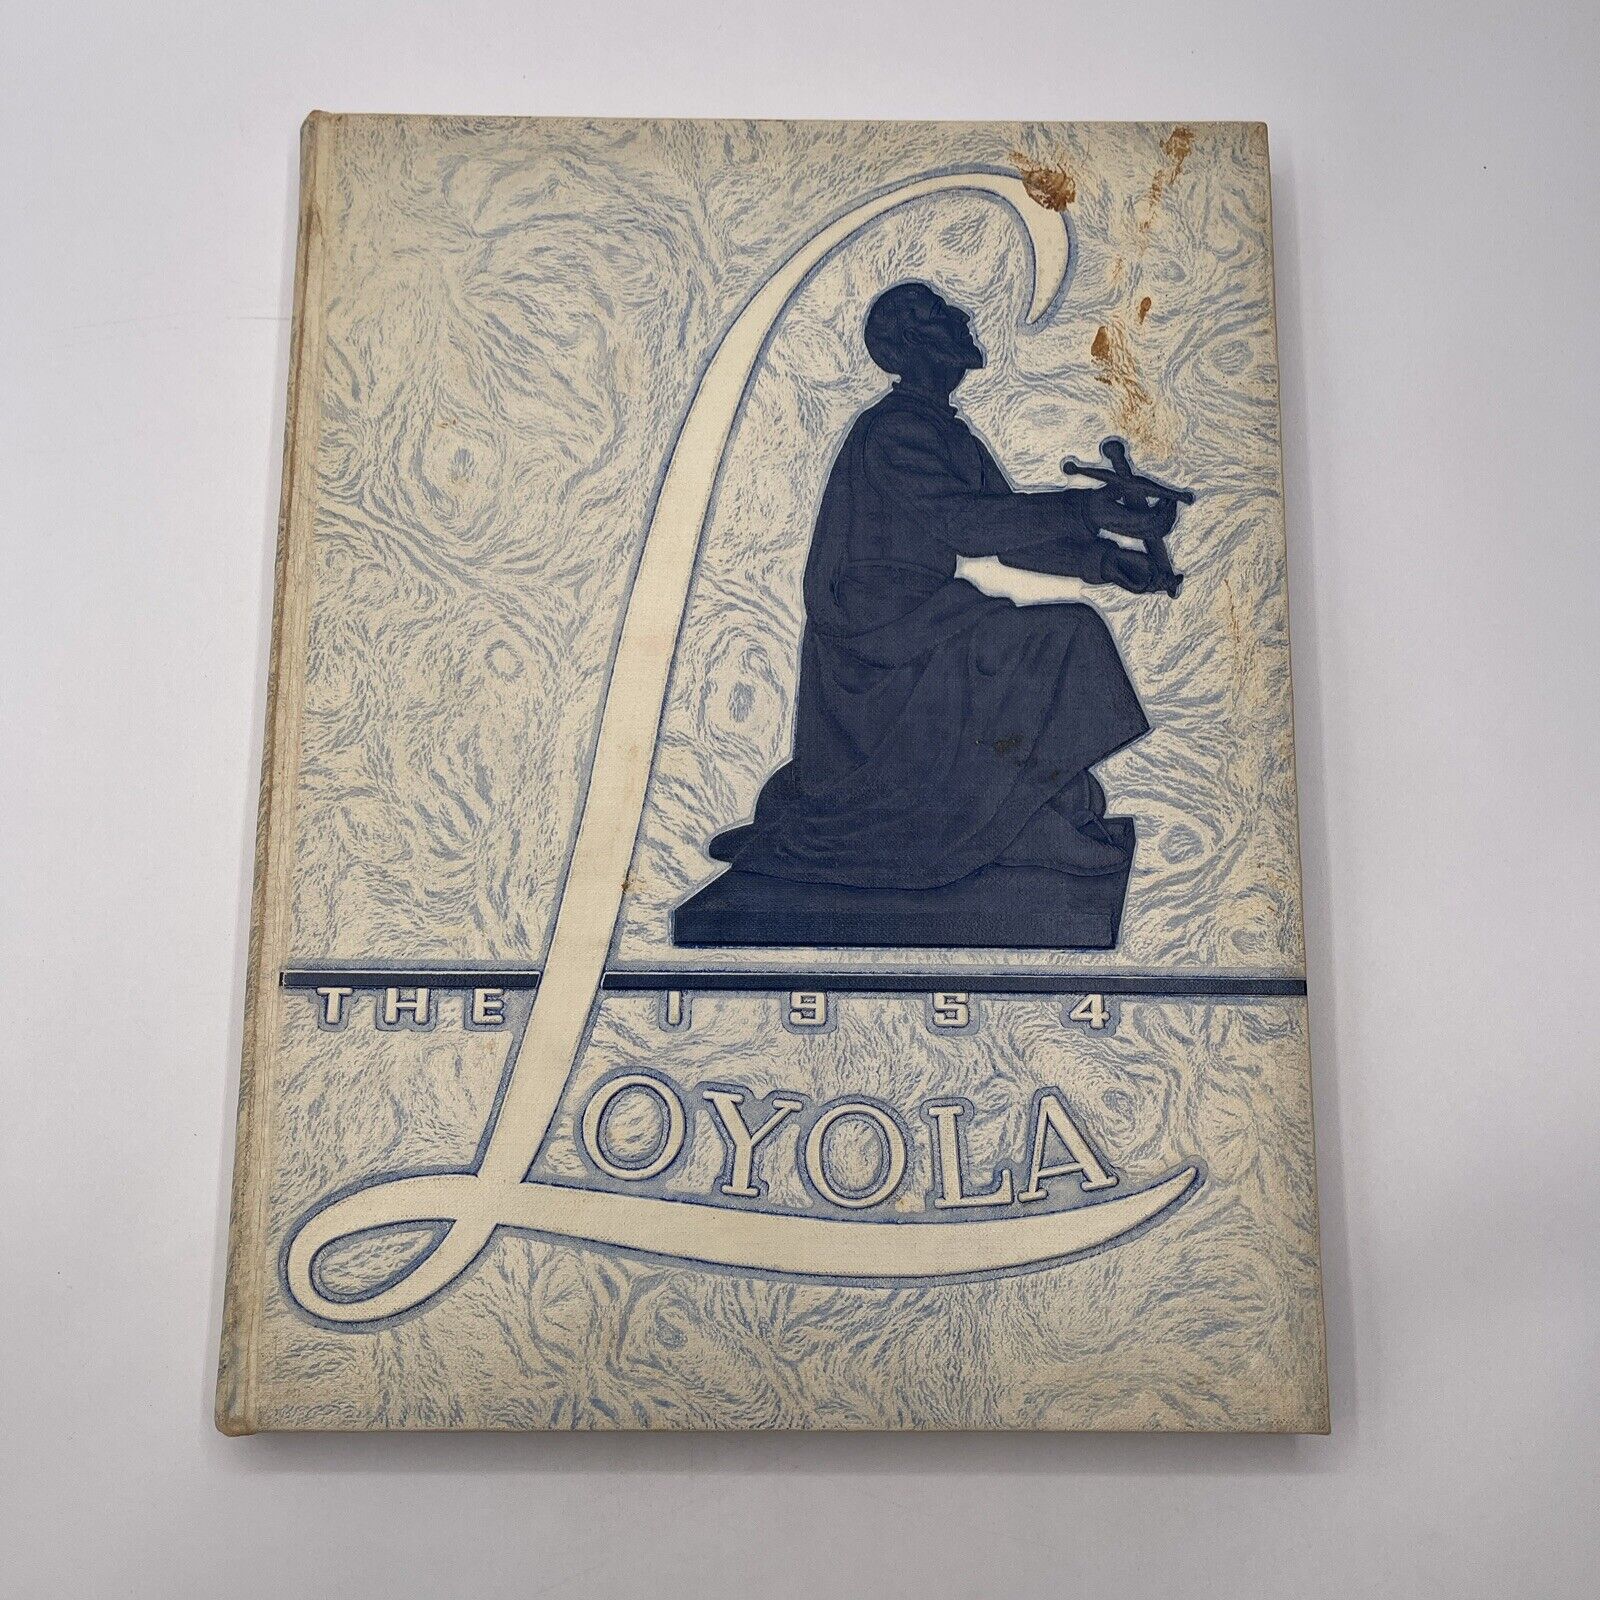 1954 Loyola High School Yearbook Towson 4, Maryland - The Marian Year